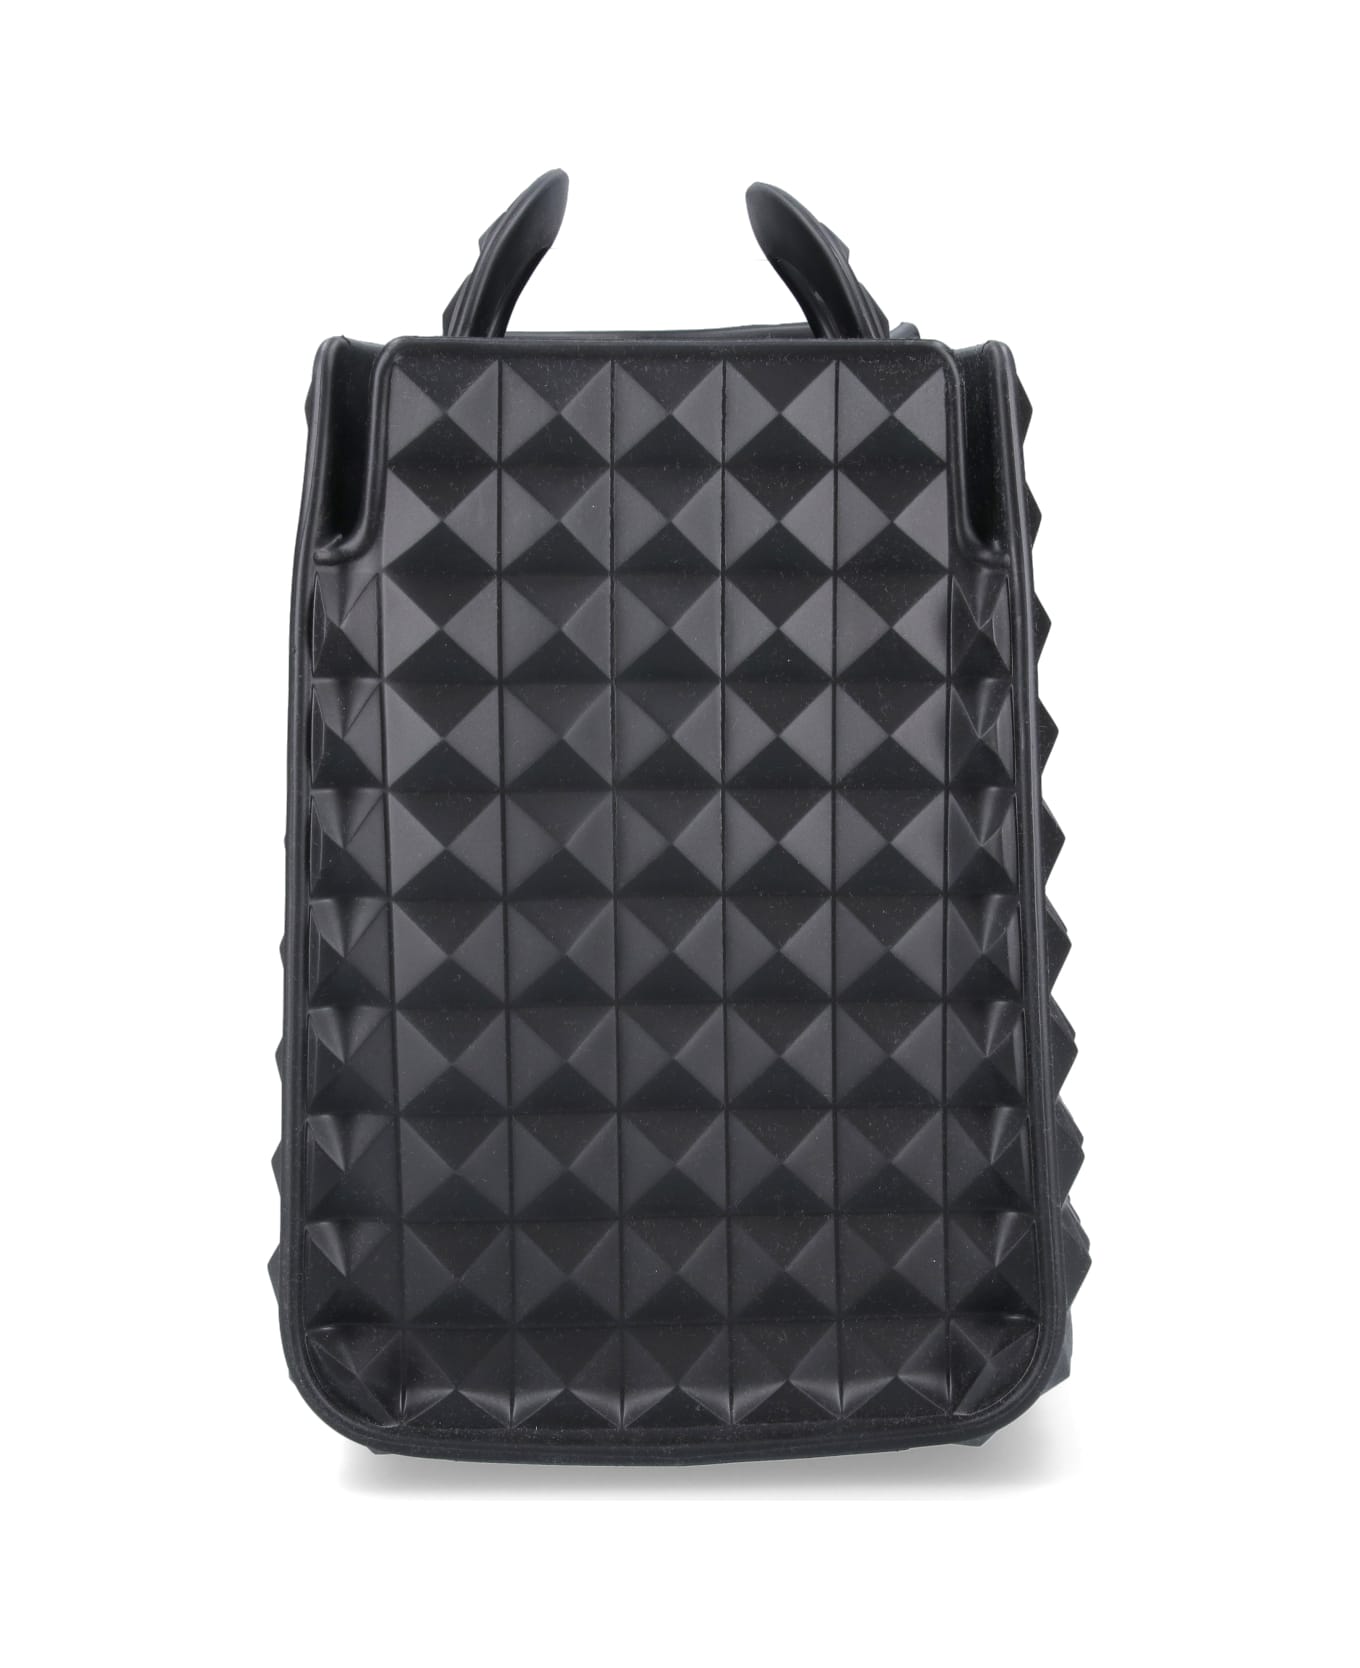 Valentino Garavani - Shopping Bag Le Troisieme Rubber - Black